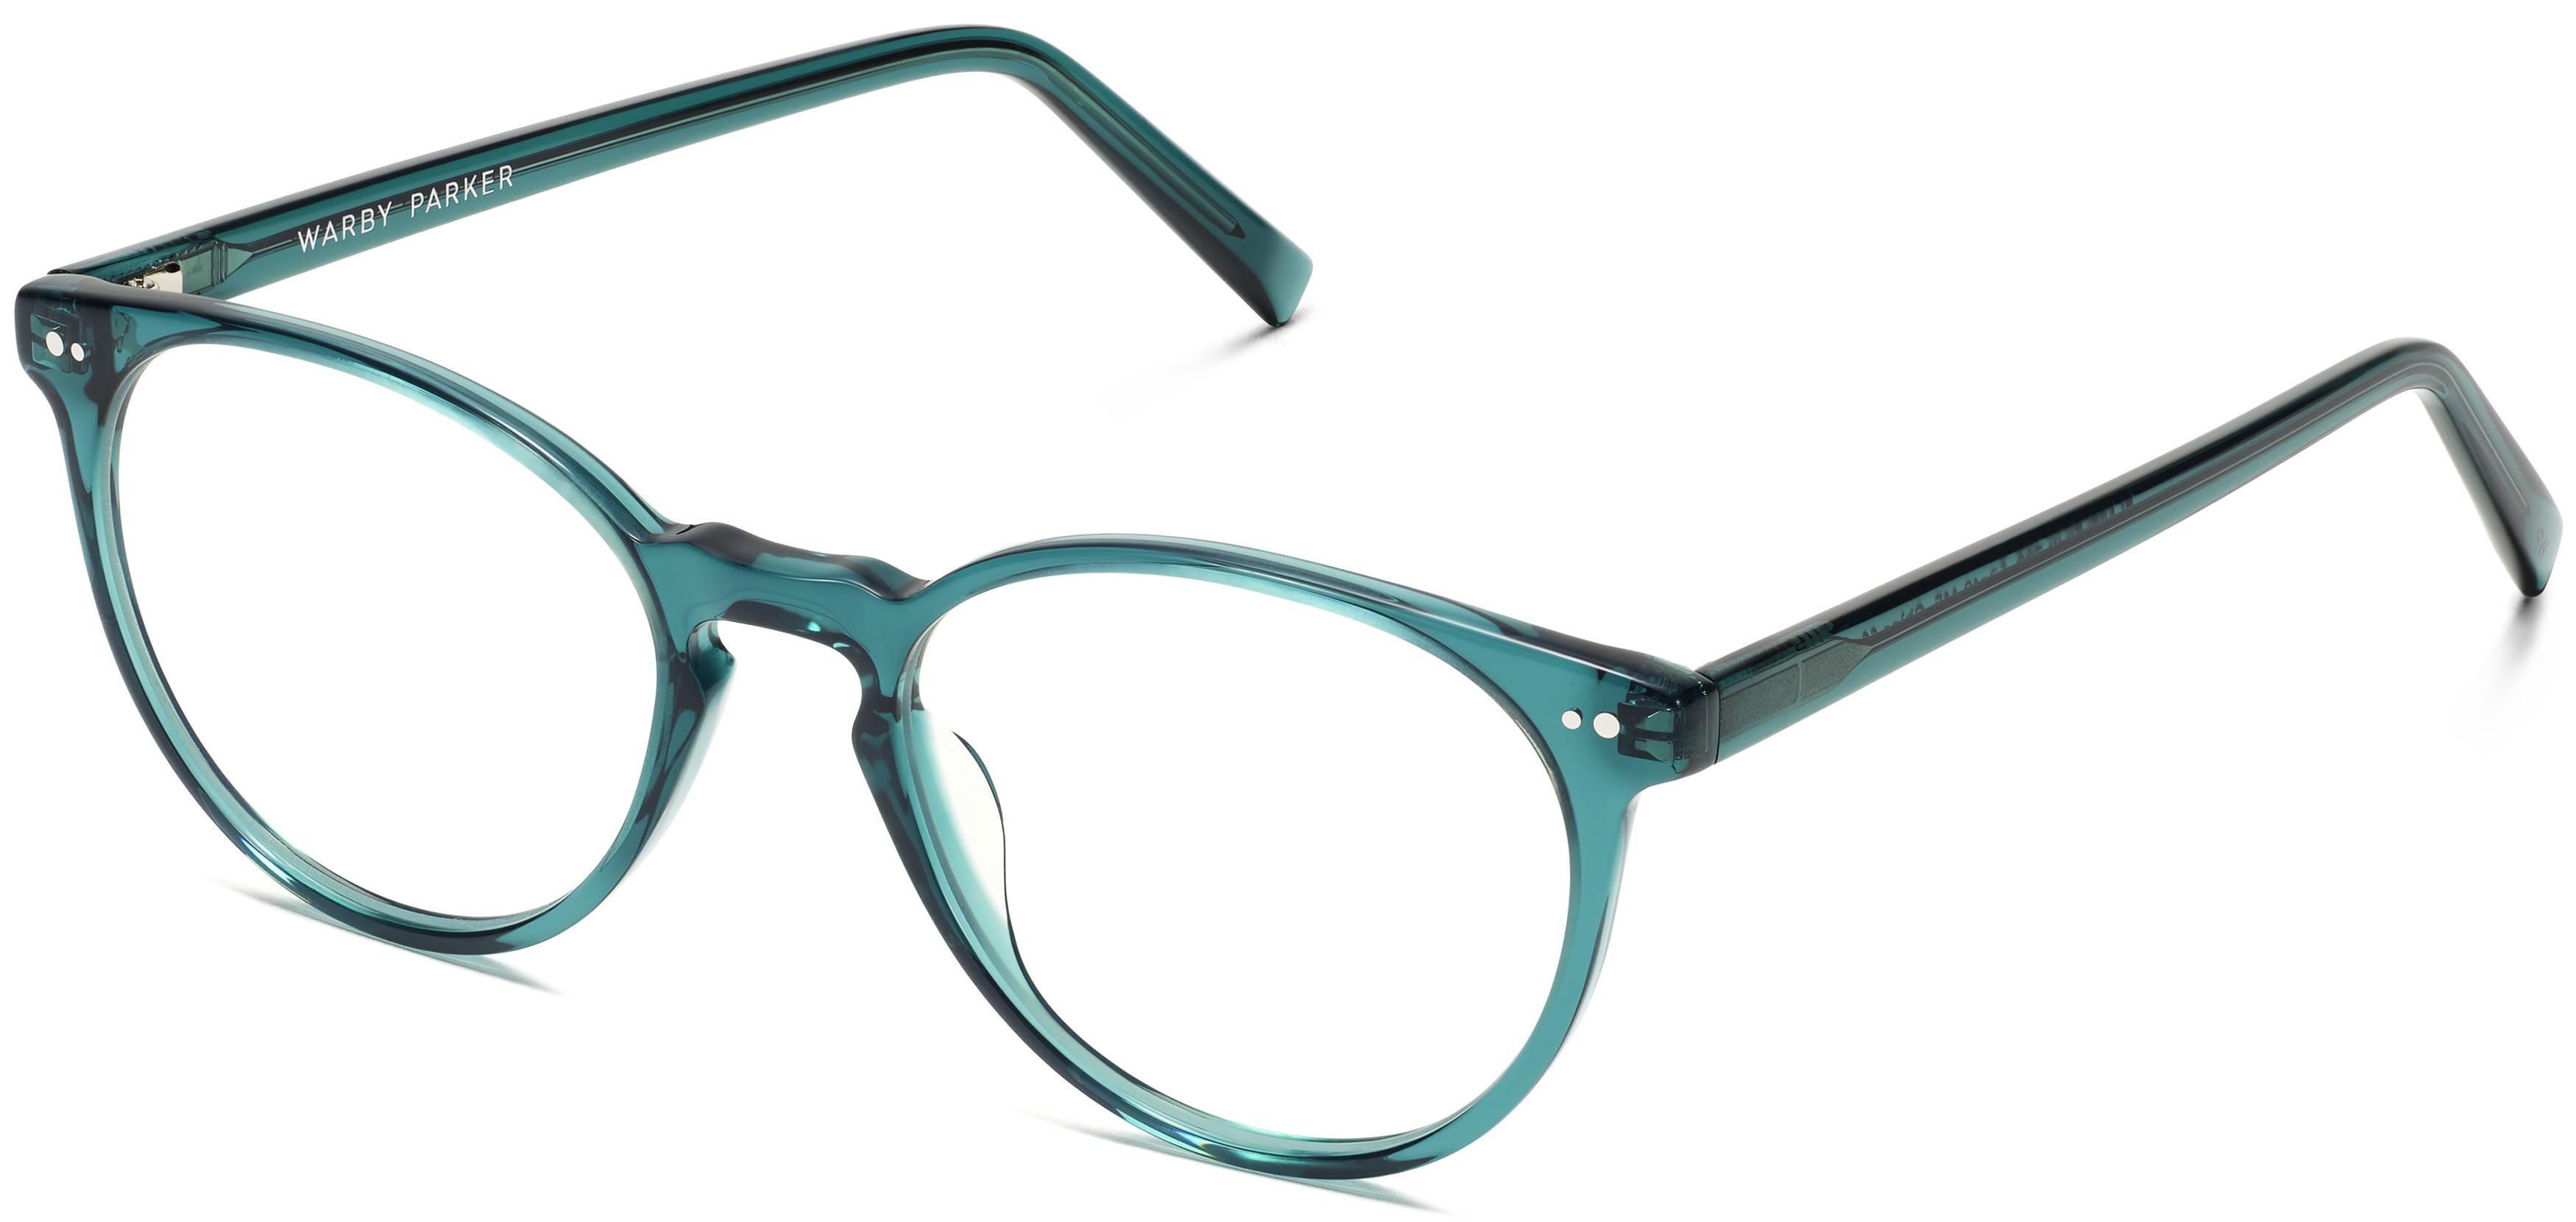 Blakeley Eyeglasses in Peacock Green | Warby Parker | Warby Parker (US)